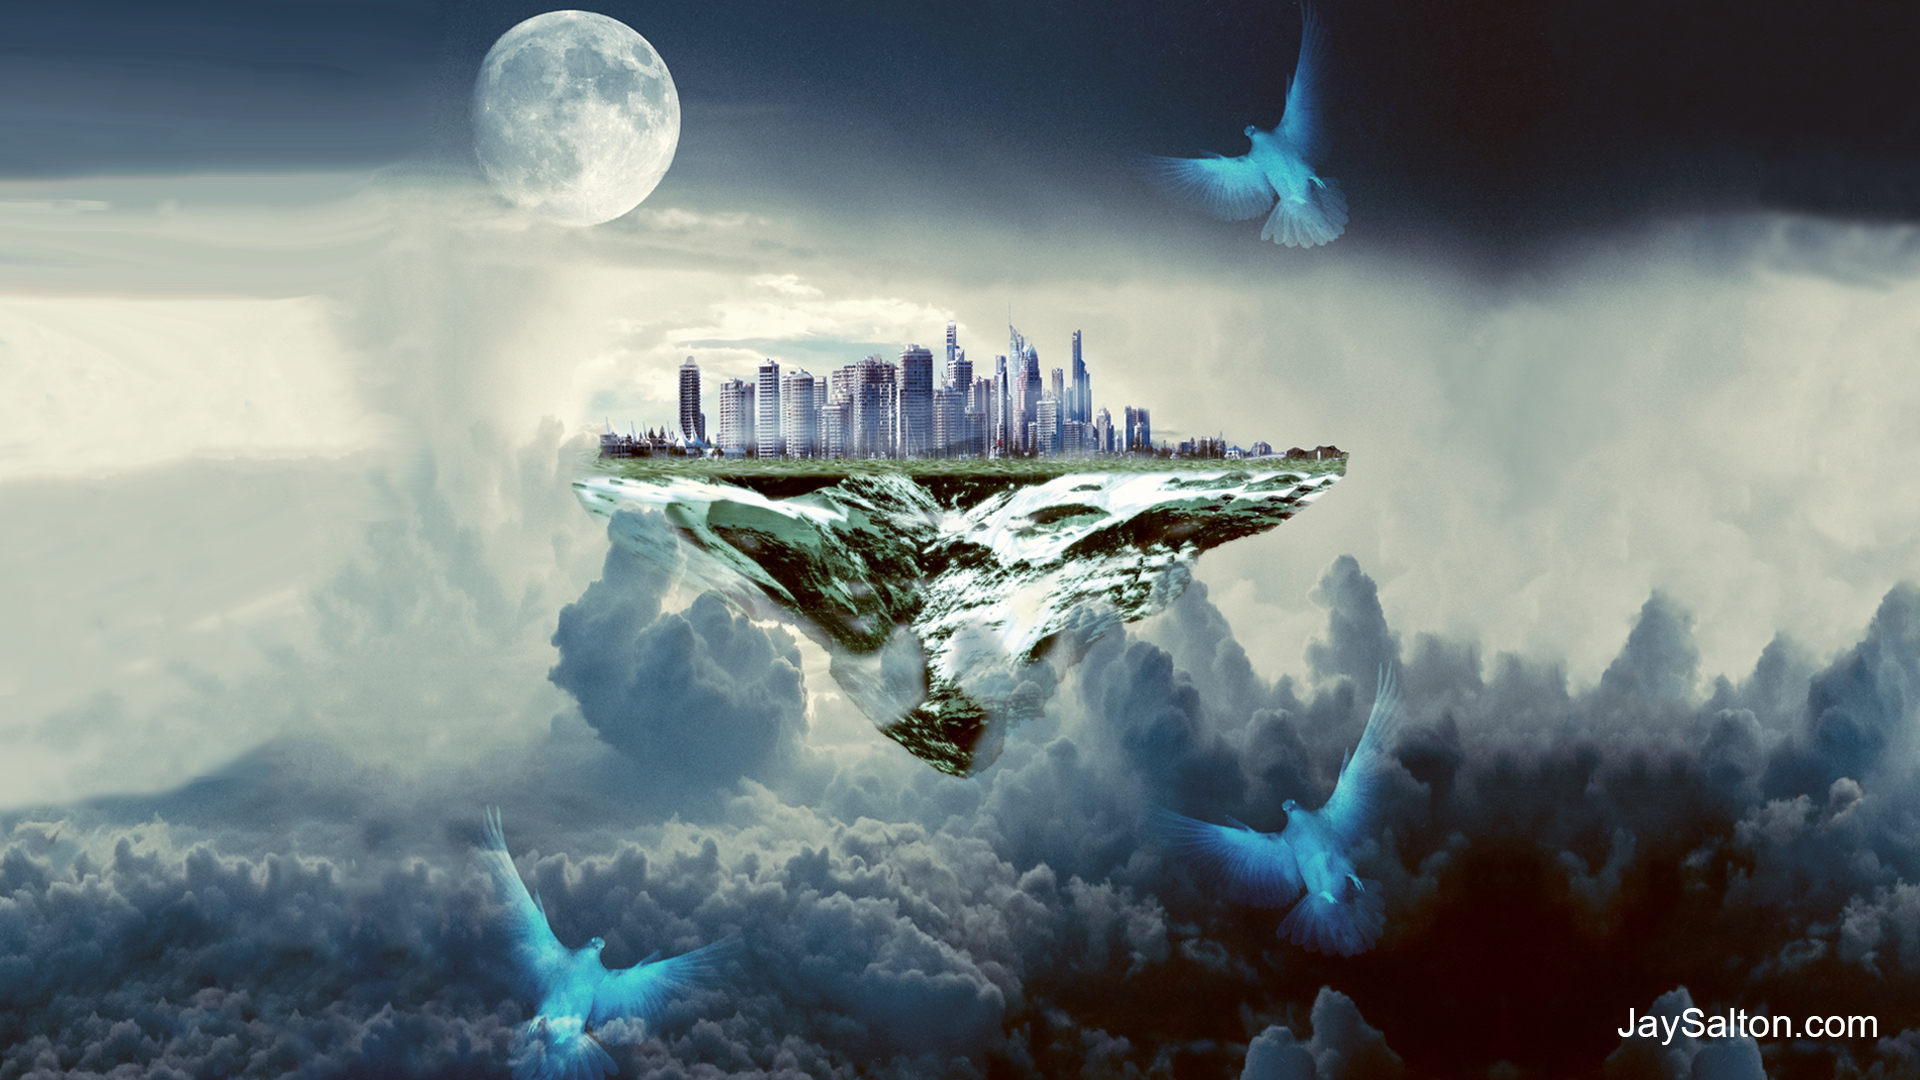 Digital Art 3D Trippy Psychedelic Science Fiction Fantasy Art Future Forest City Futuristic City Cit 1920x1080